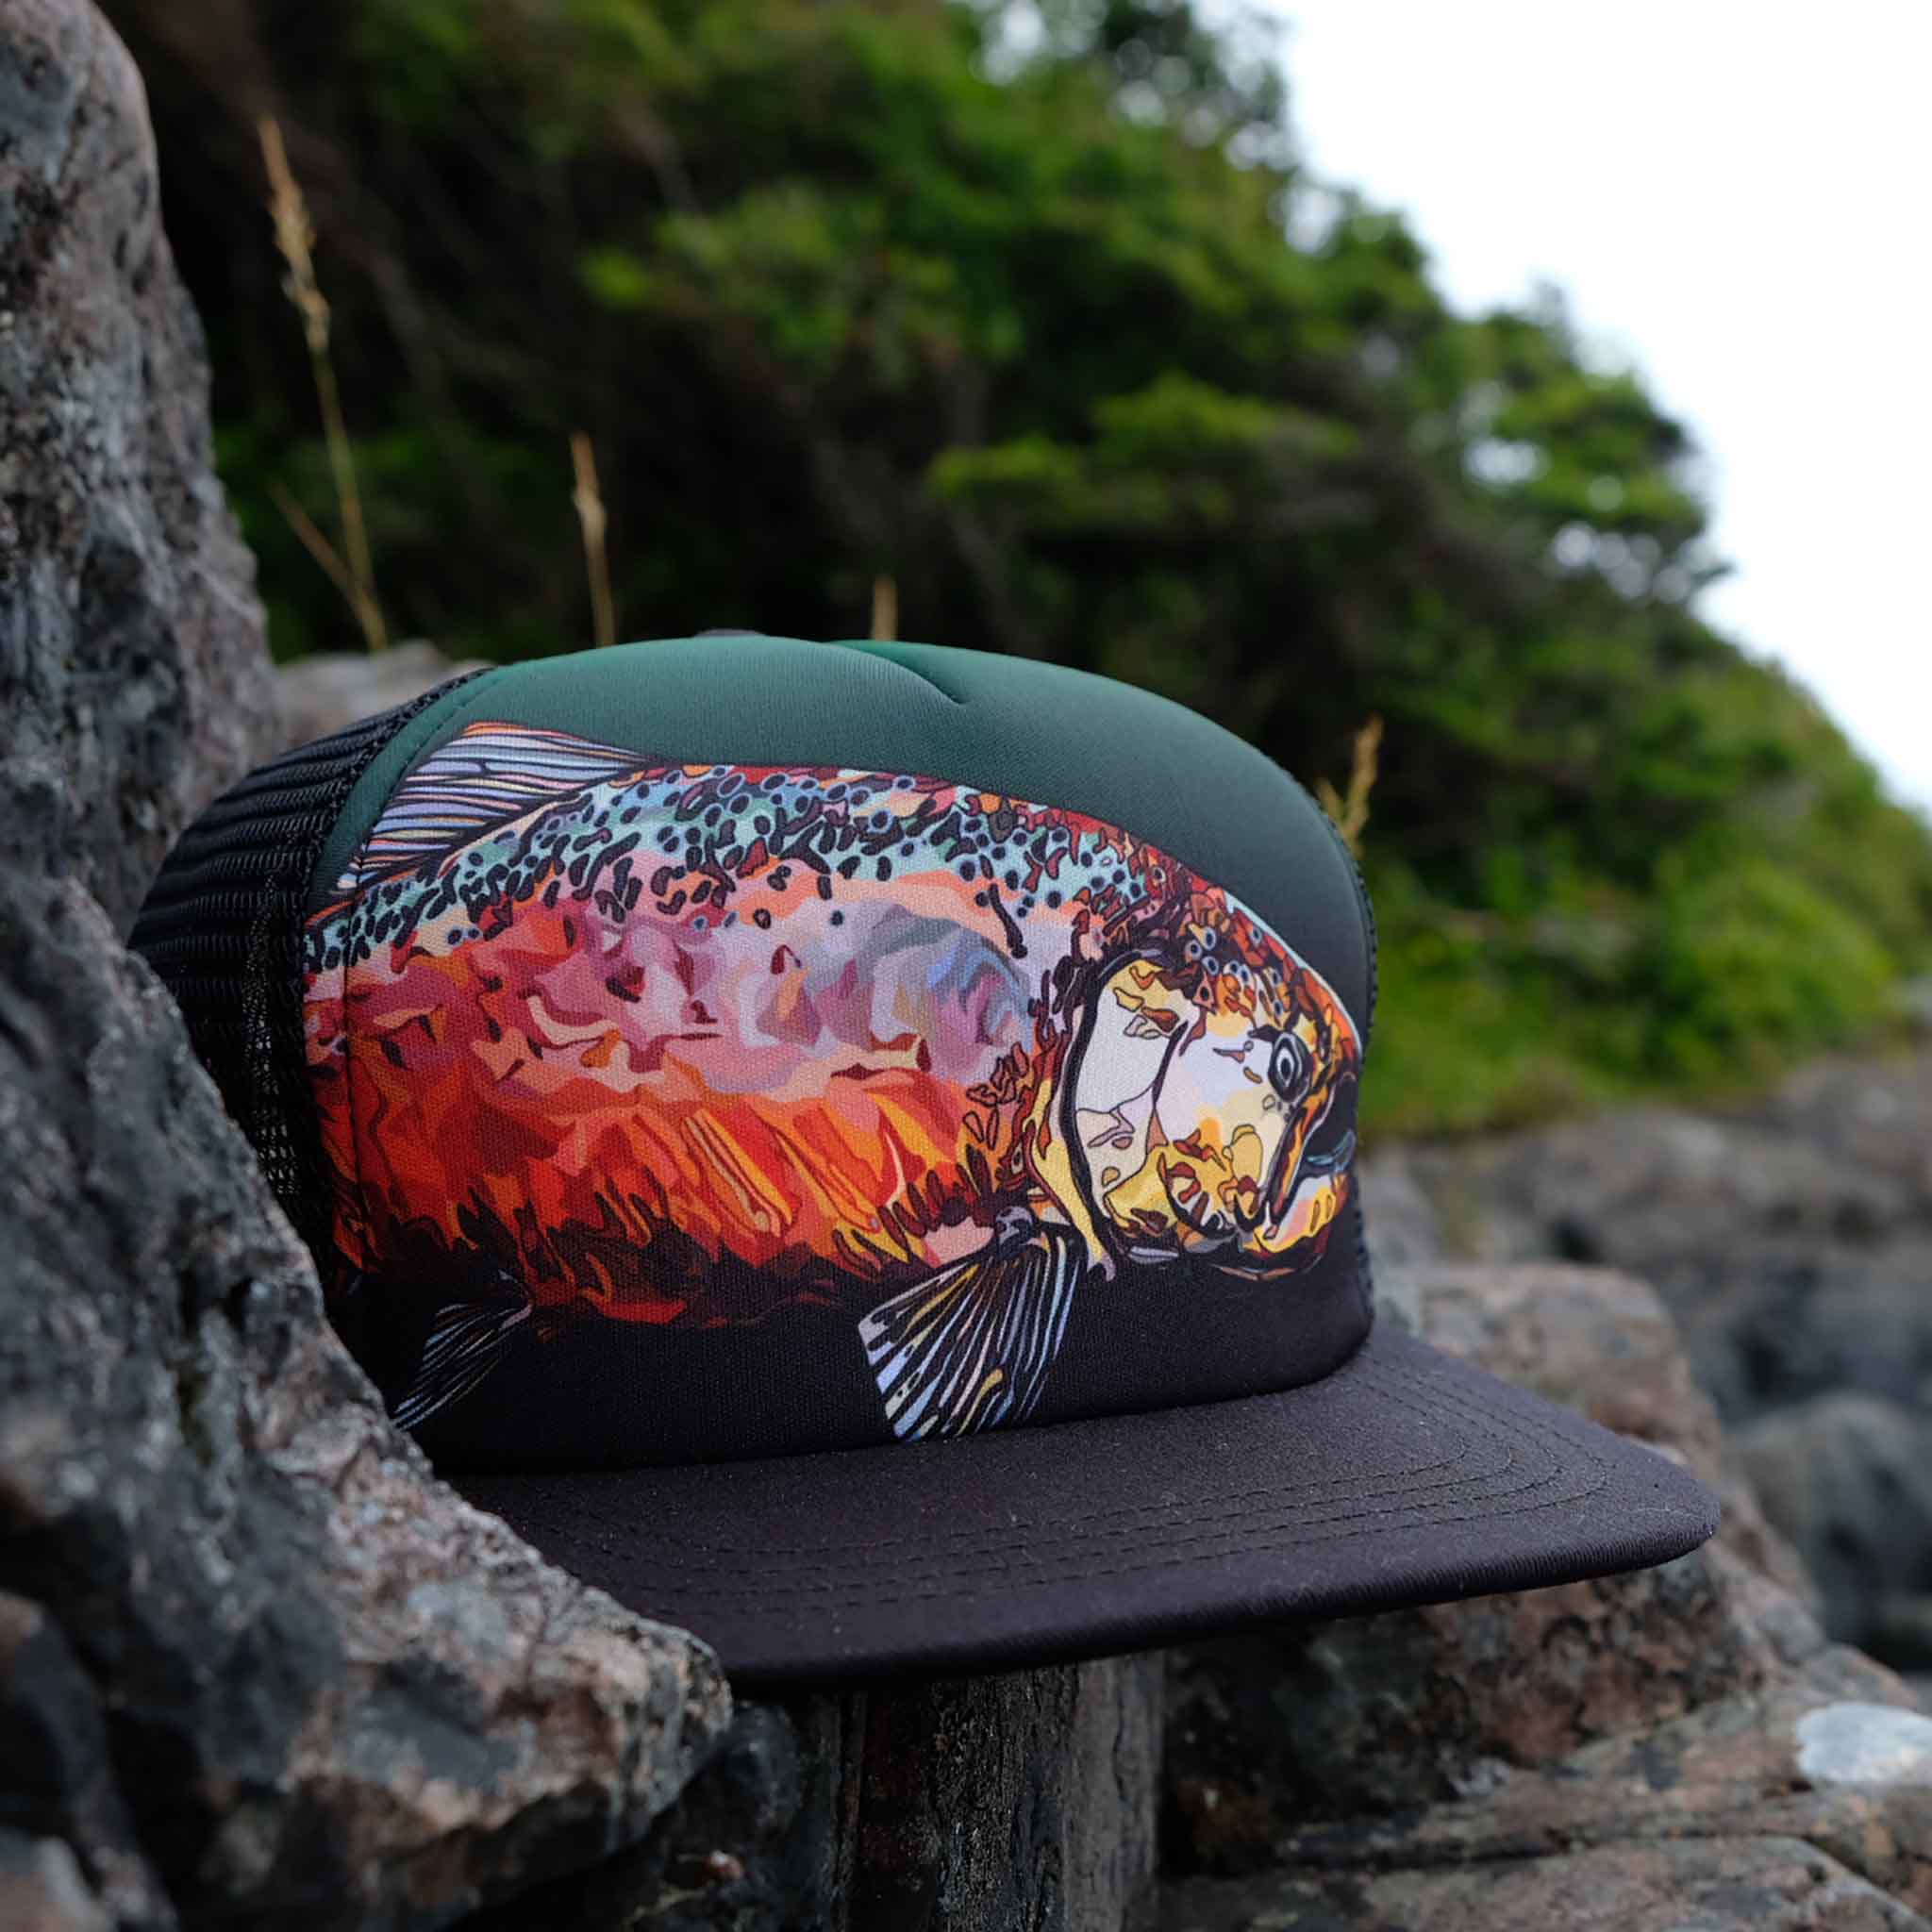 Chinook salmon fishing hats for men, women custom name baseball